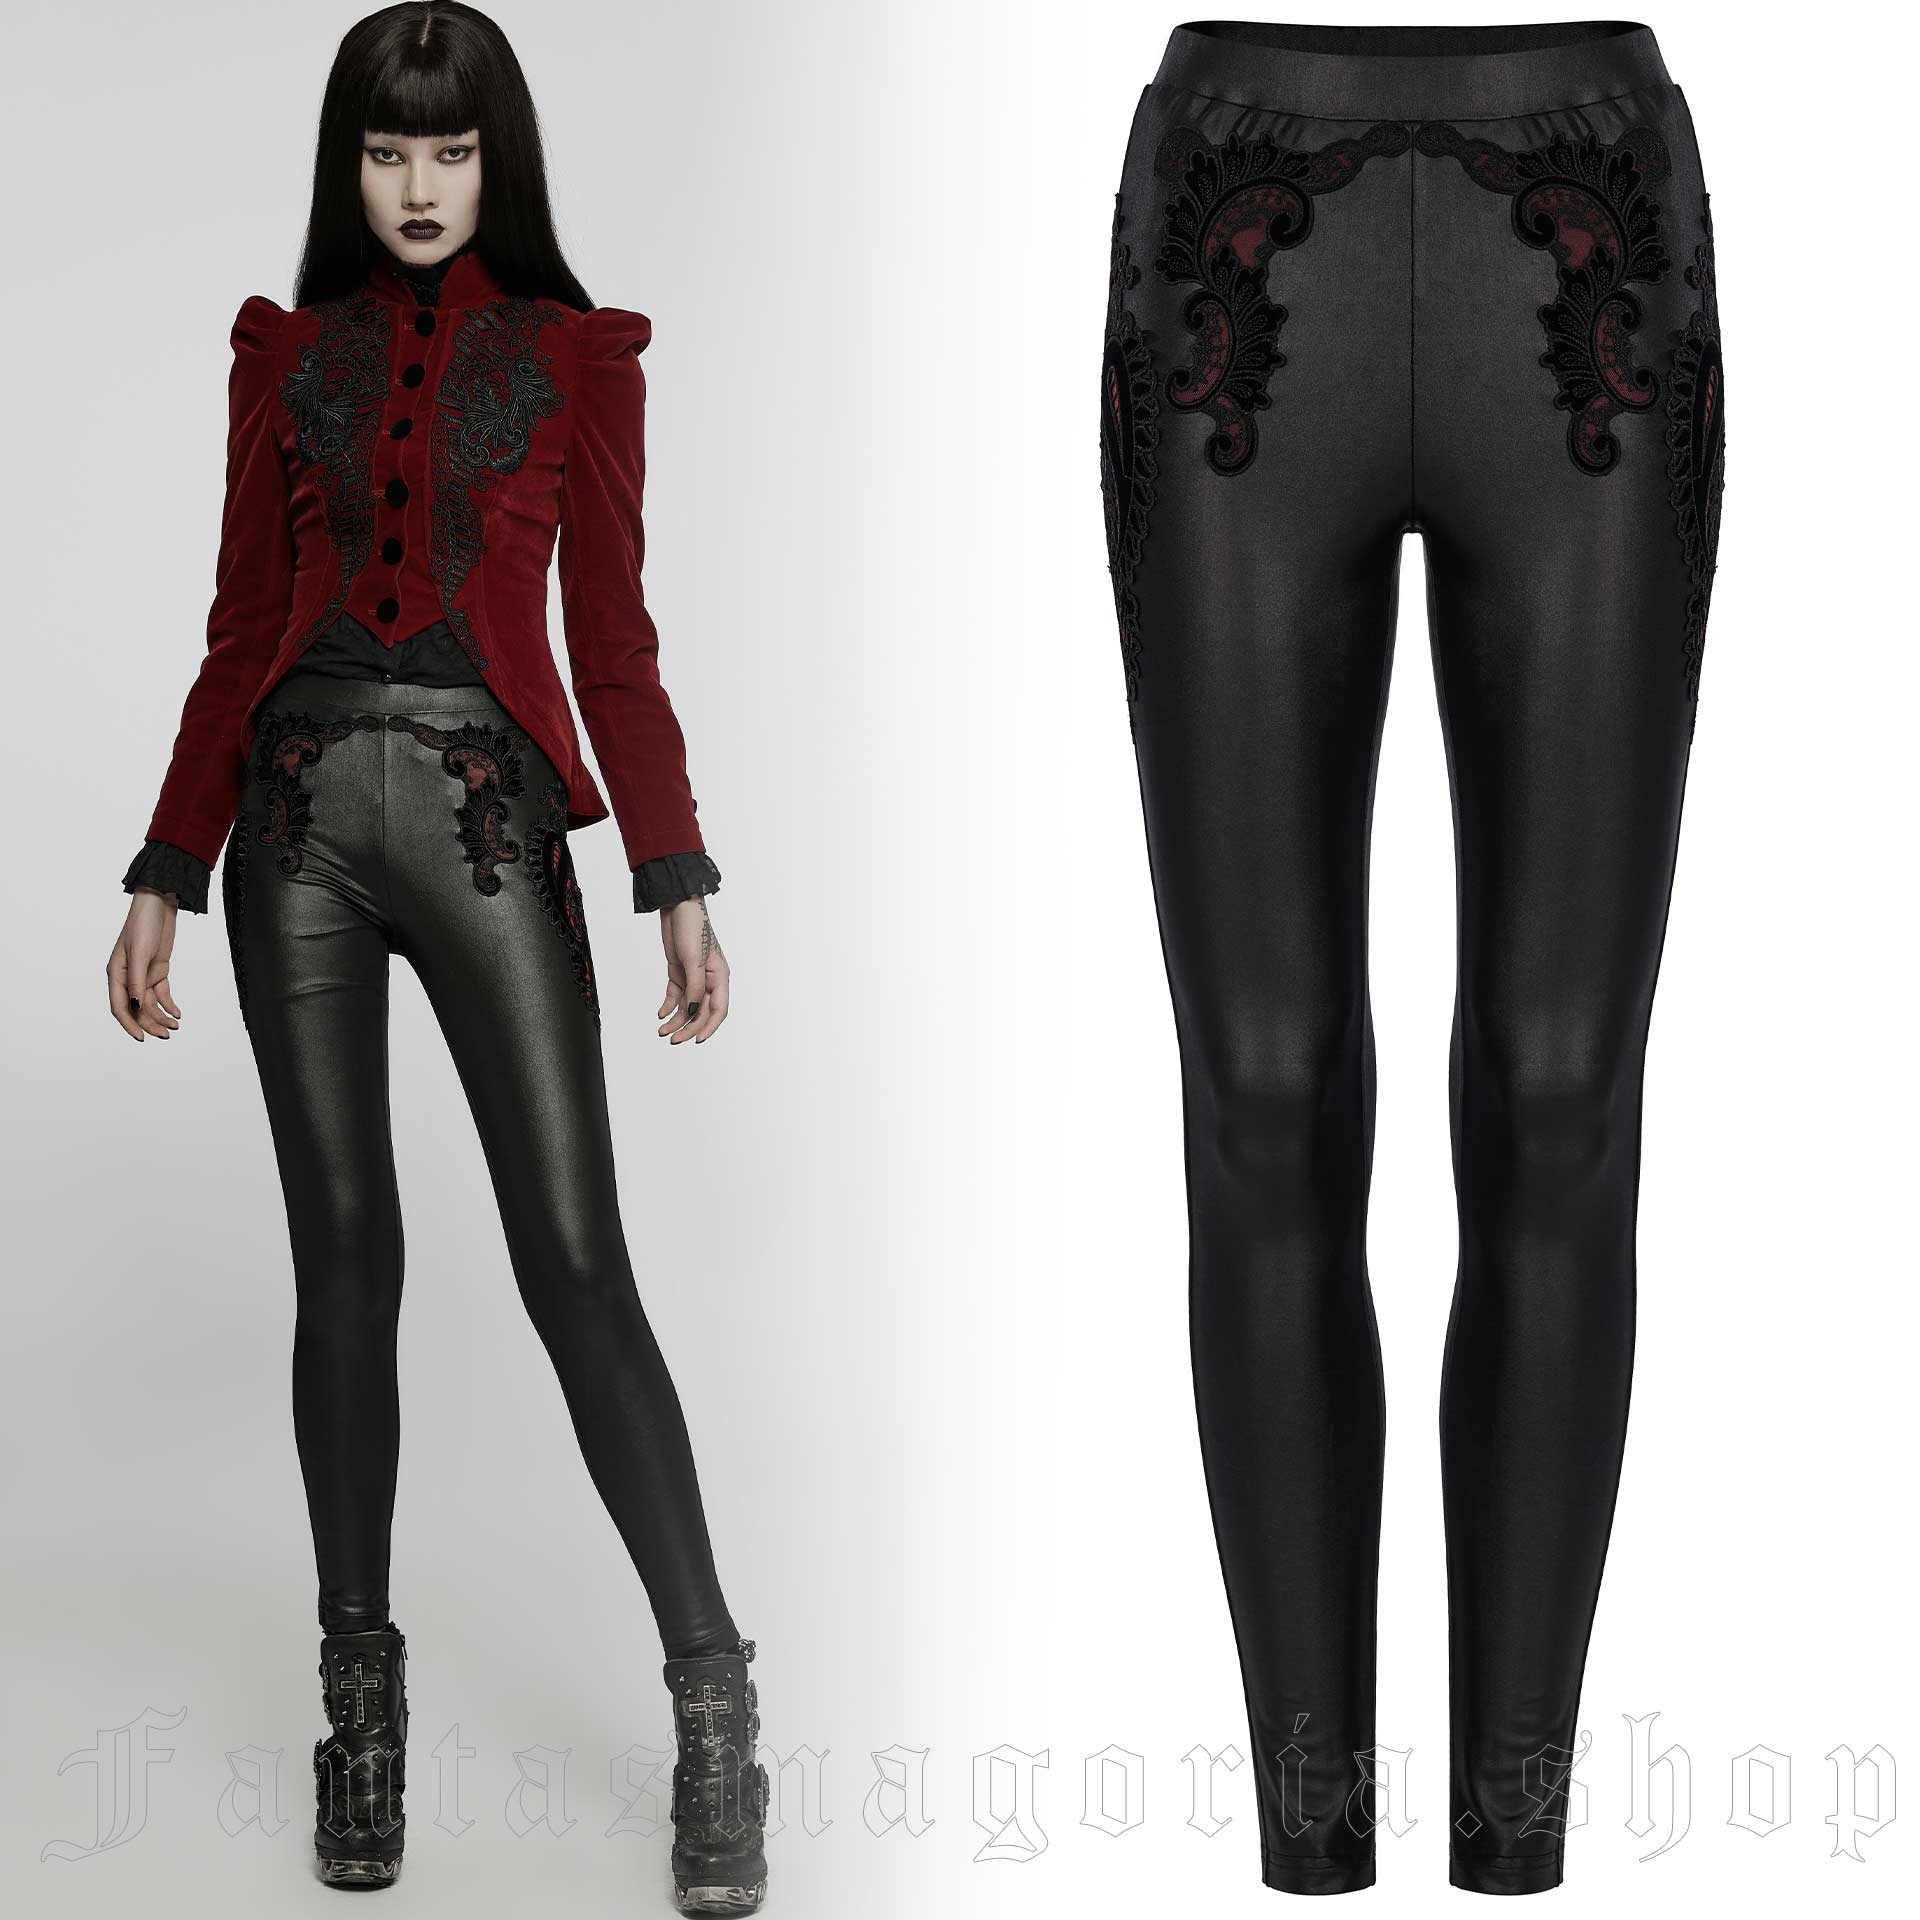 WK-516 Womens Gothic Lace Applique Leggings - Black & Red – Punk Rave